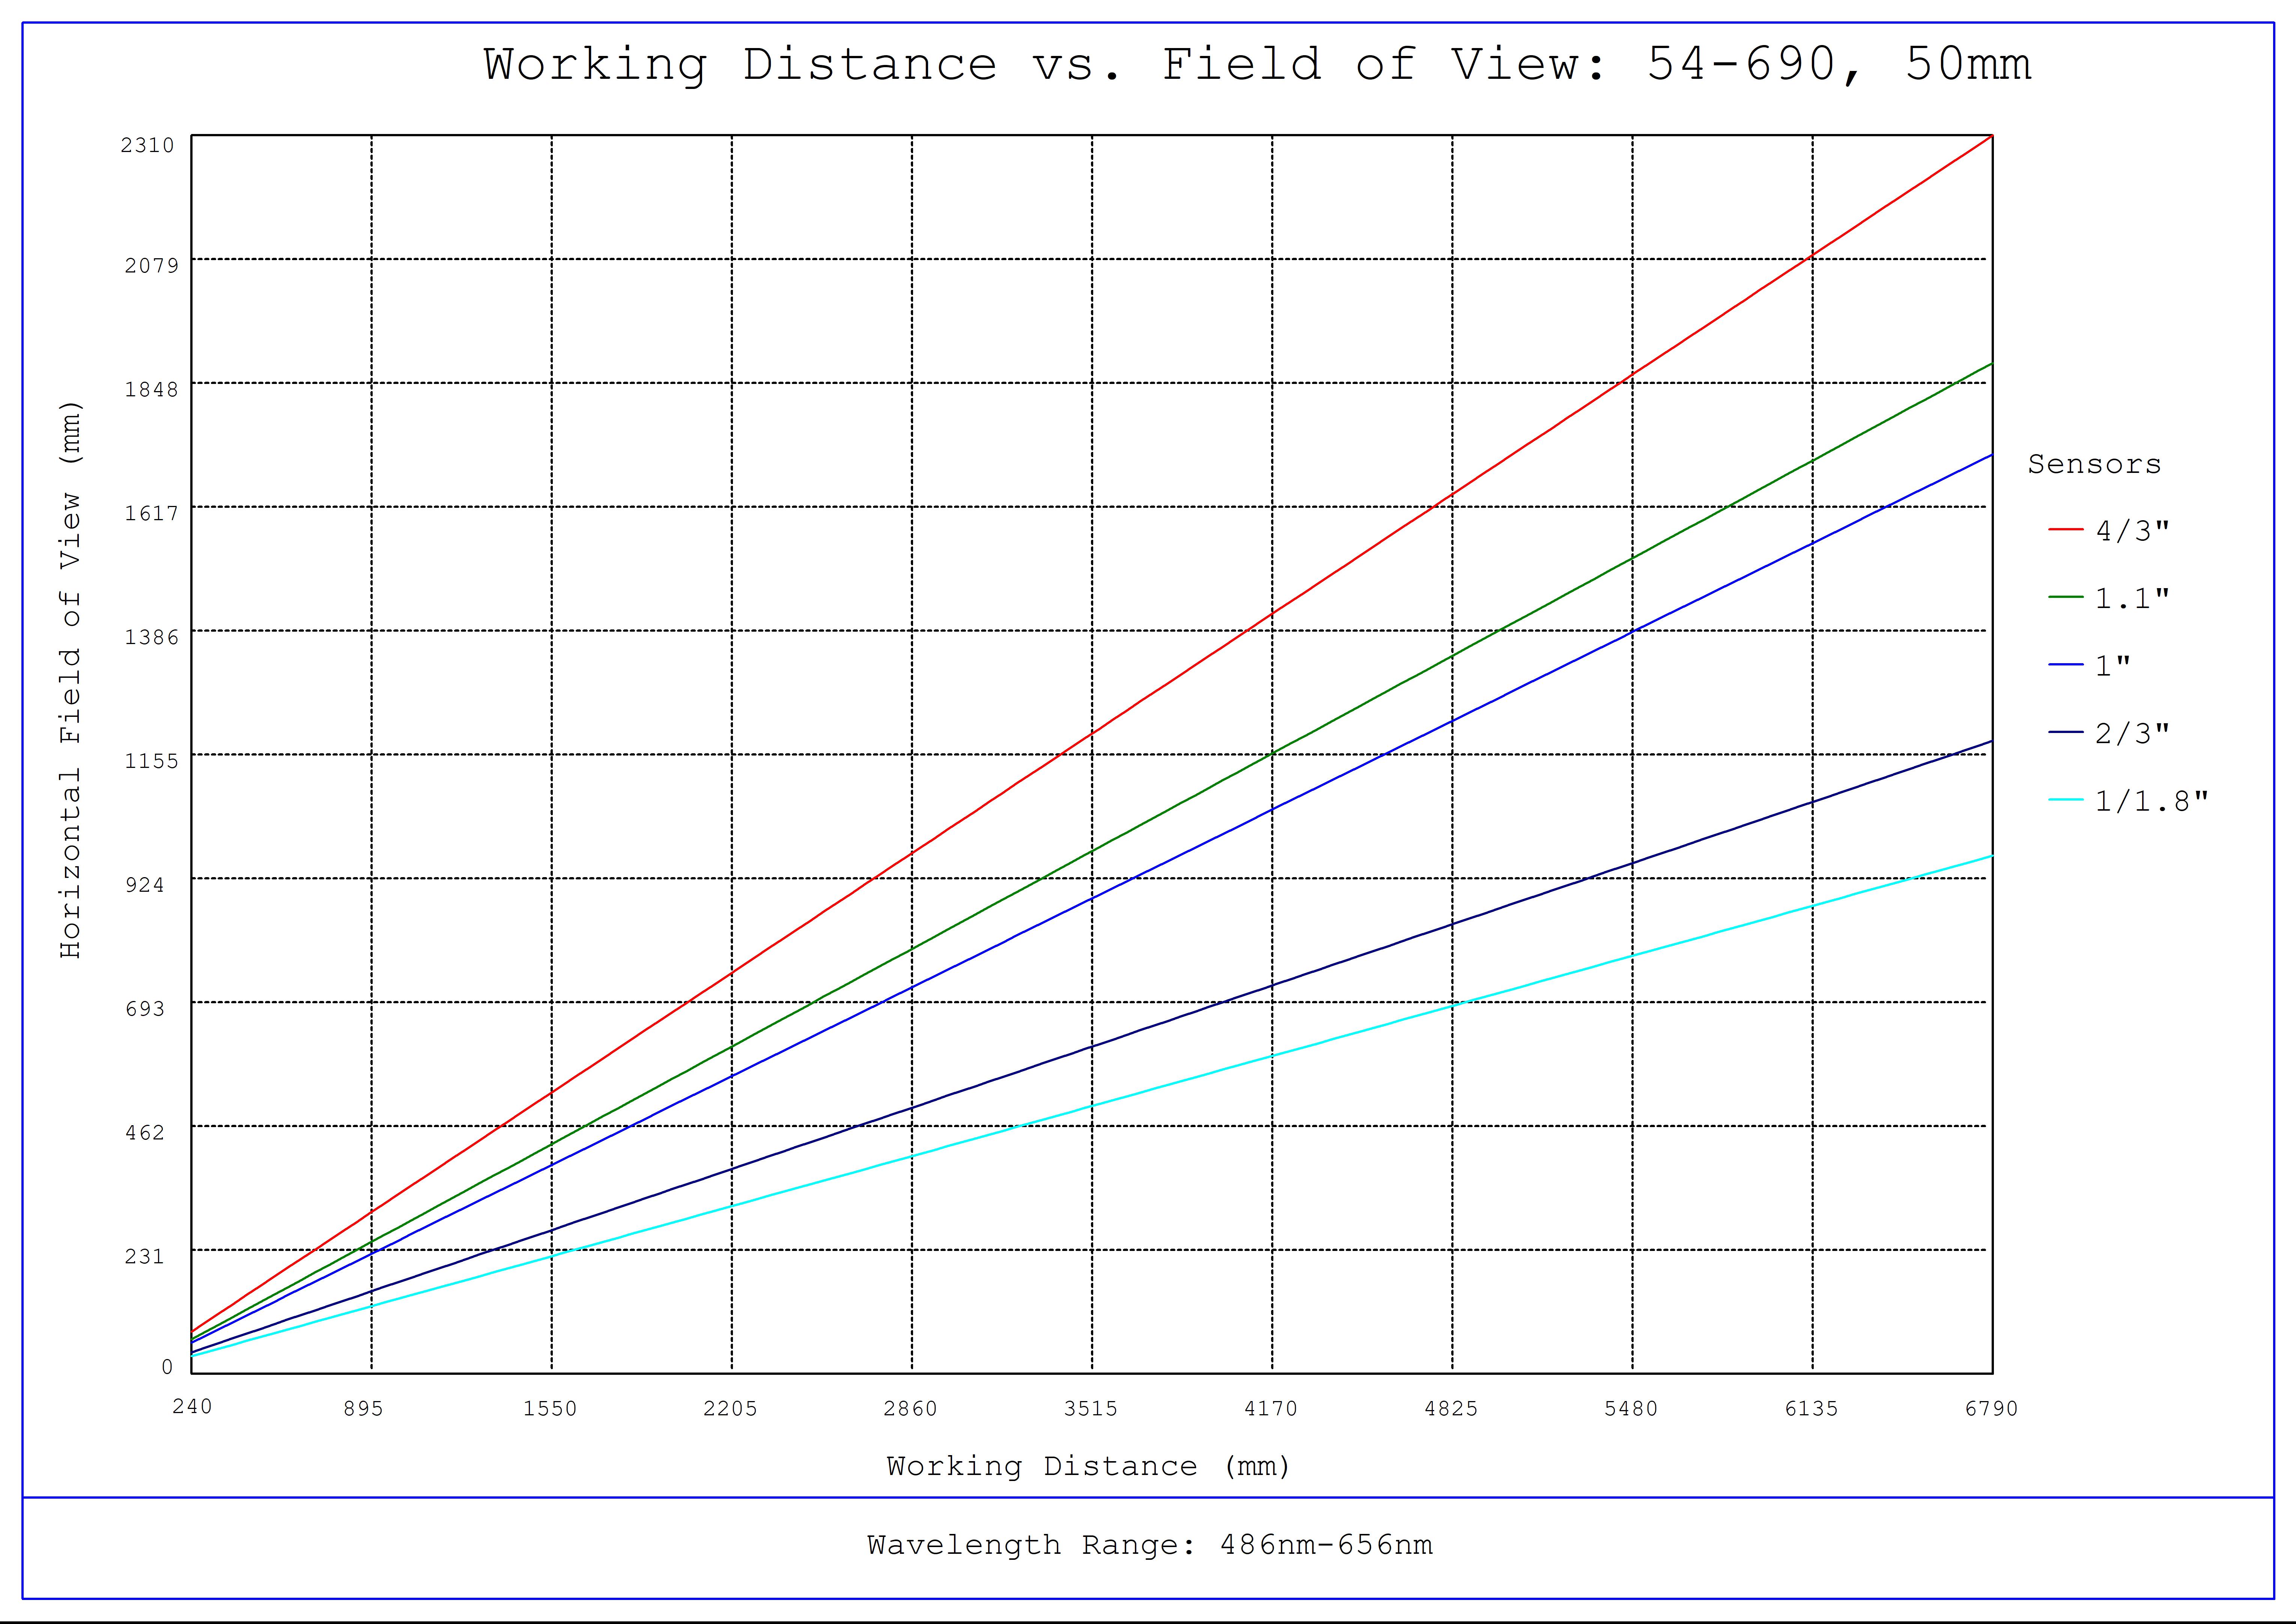 #54-690, 50mm DG Series Fixed Focal Length Lens, Working Distance versus Field of View Plot